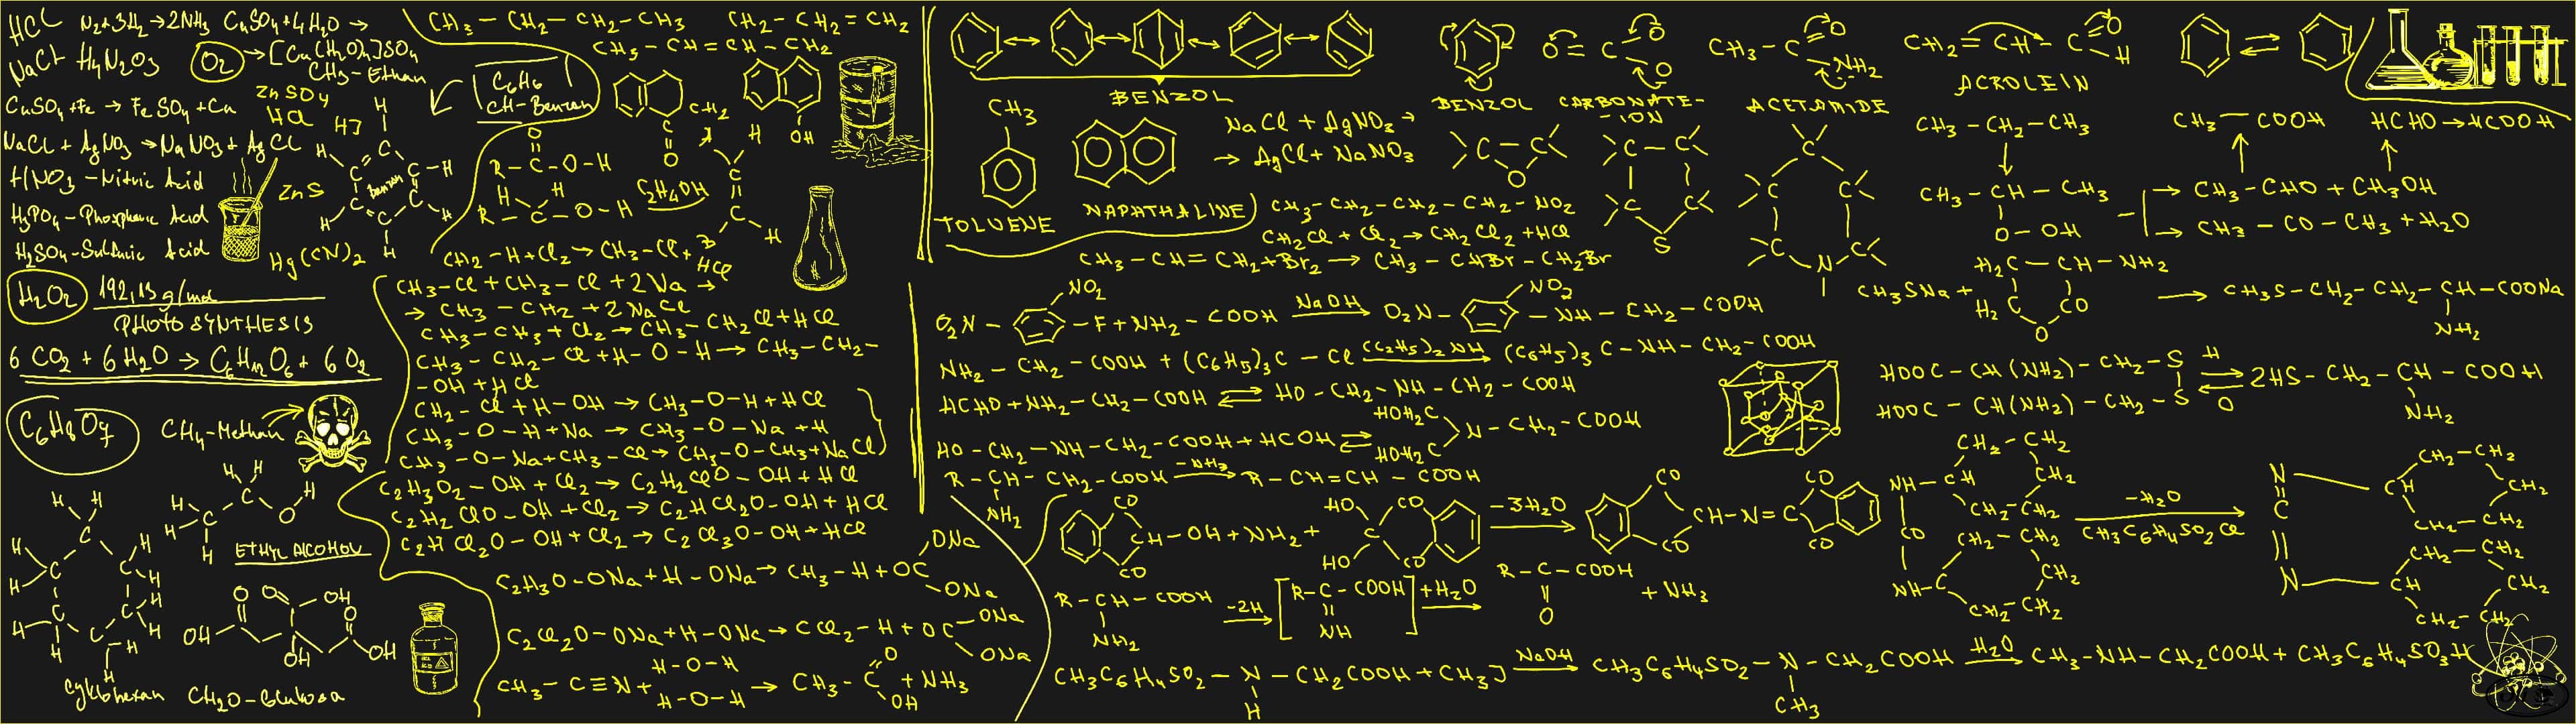 3840x1080 organic chemistry wallpapers - http://hdwallpaper.info/organic-chemistry-